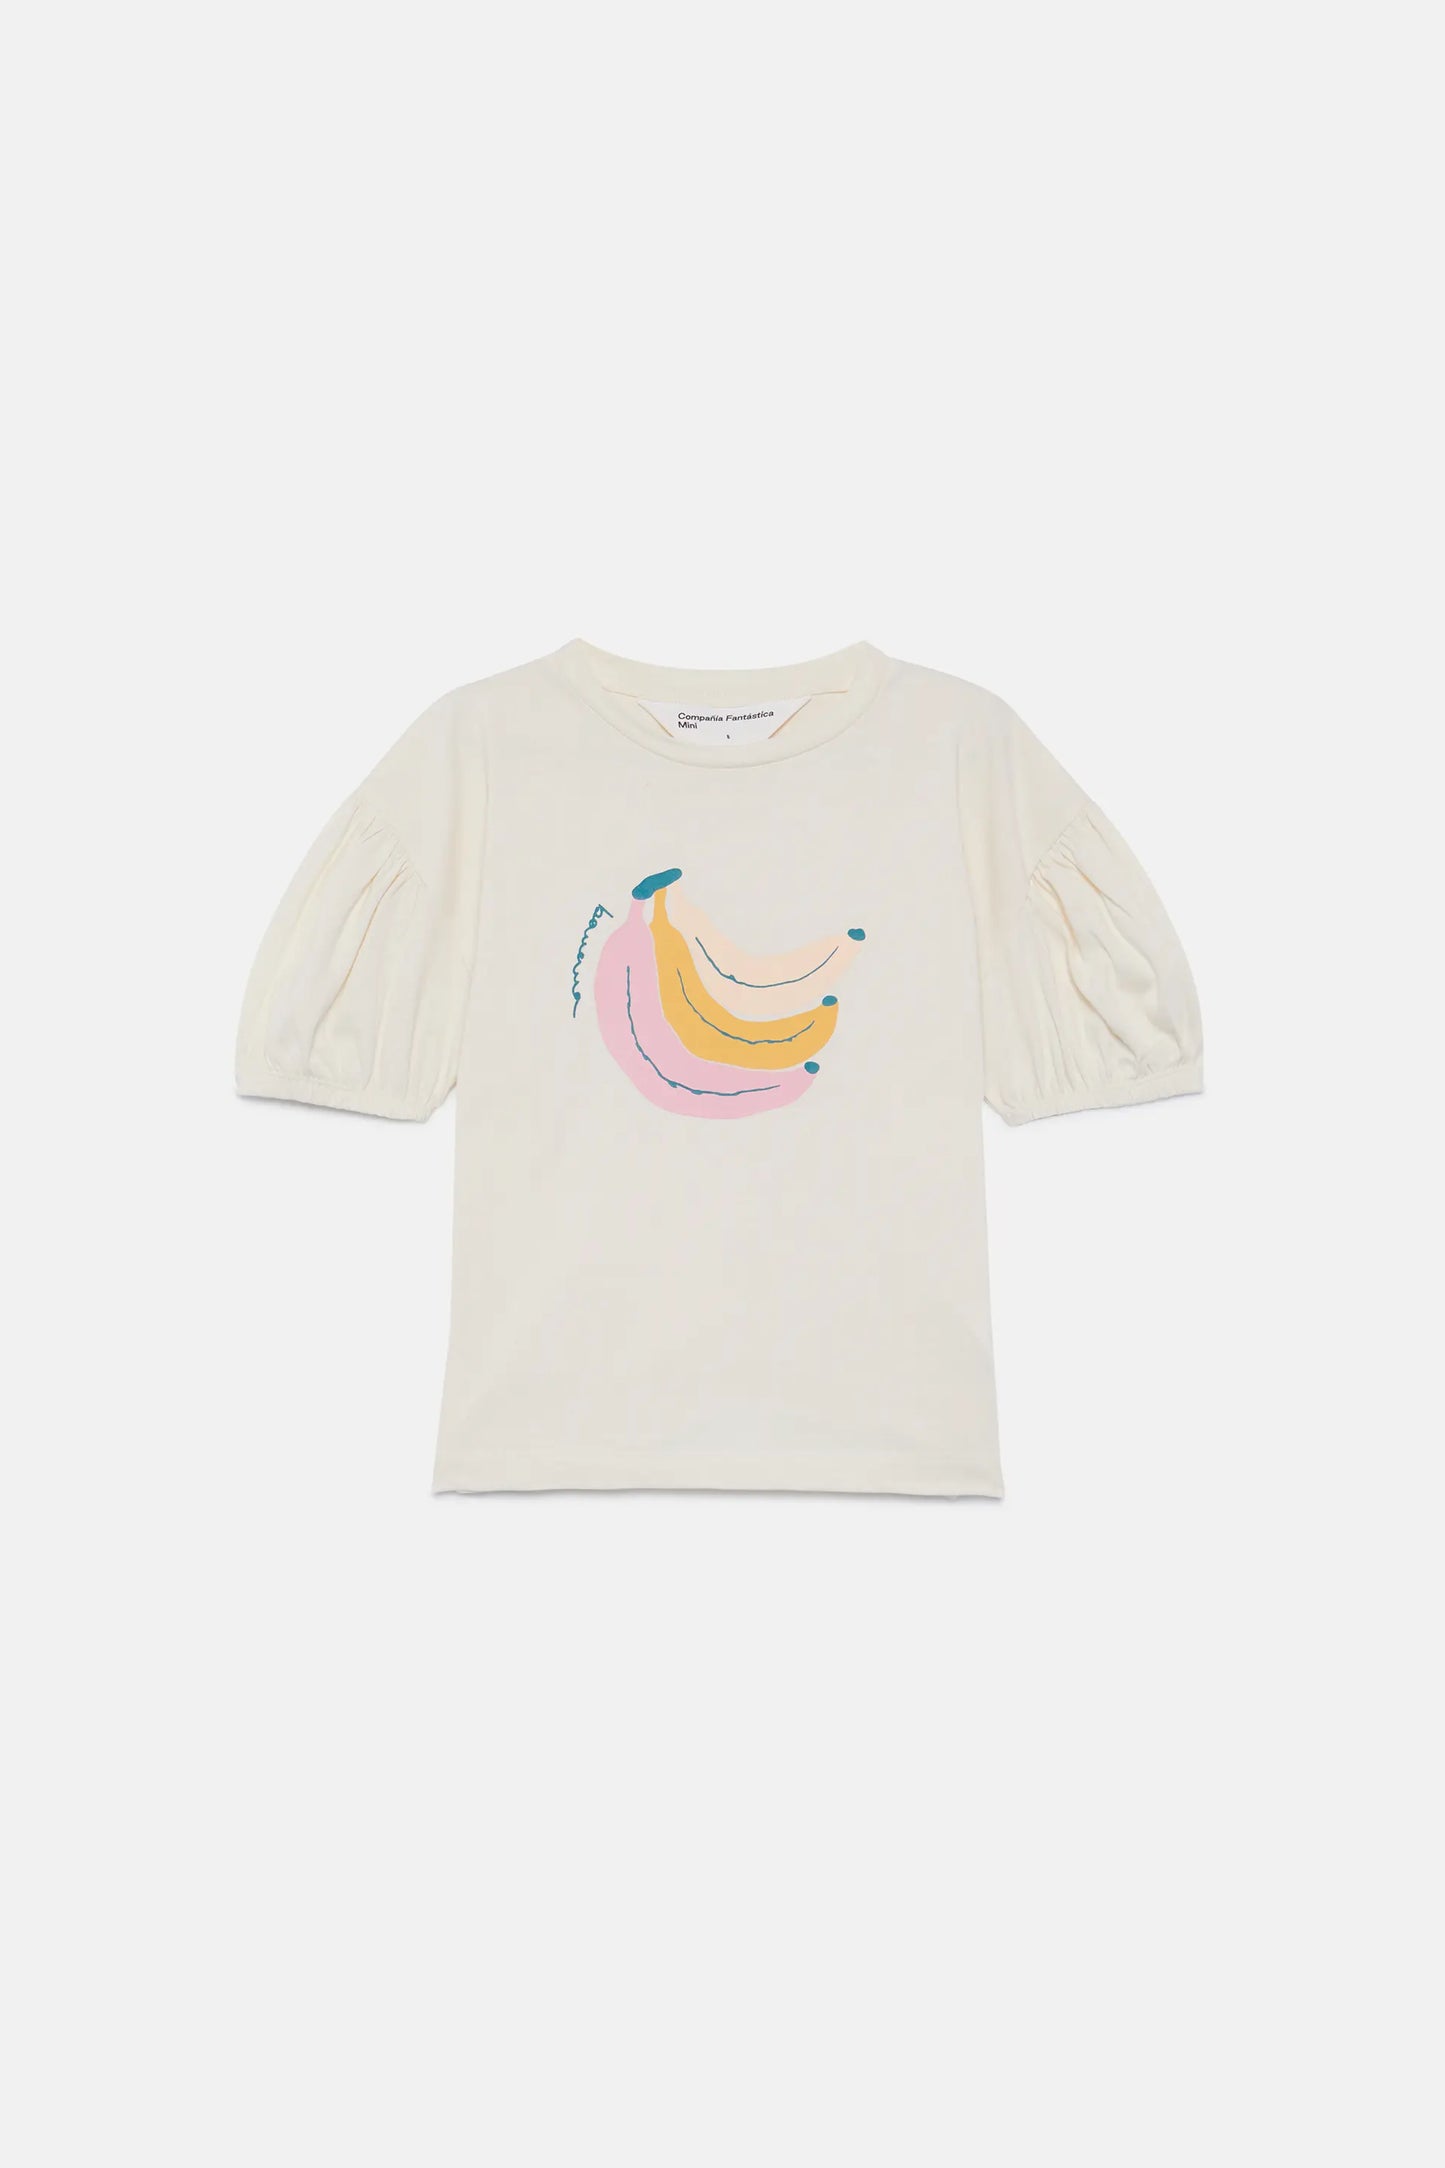 Camiseta de niña print de plátanos blanca